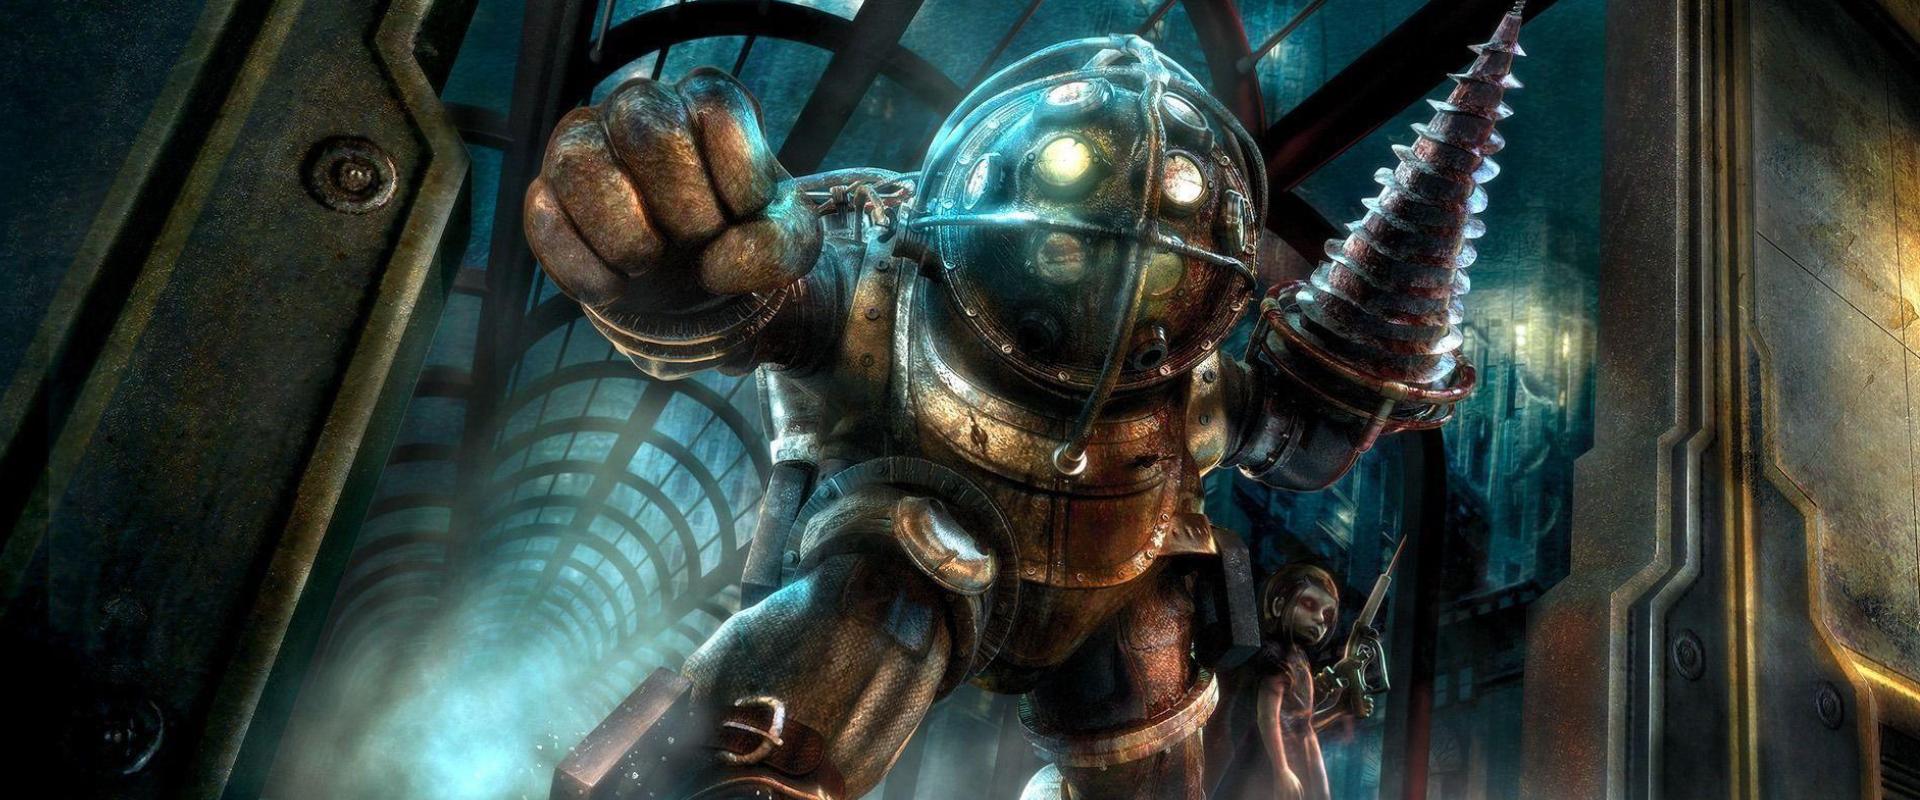 Mi a helyzet a BioShock 4-gyel?